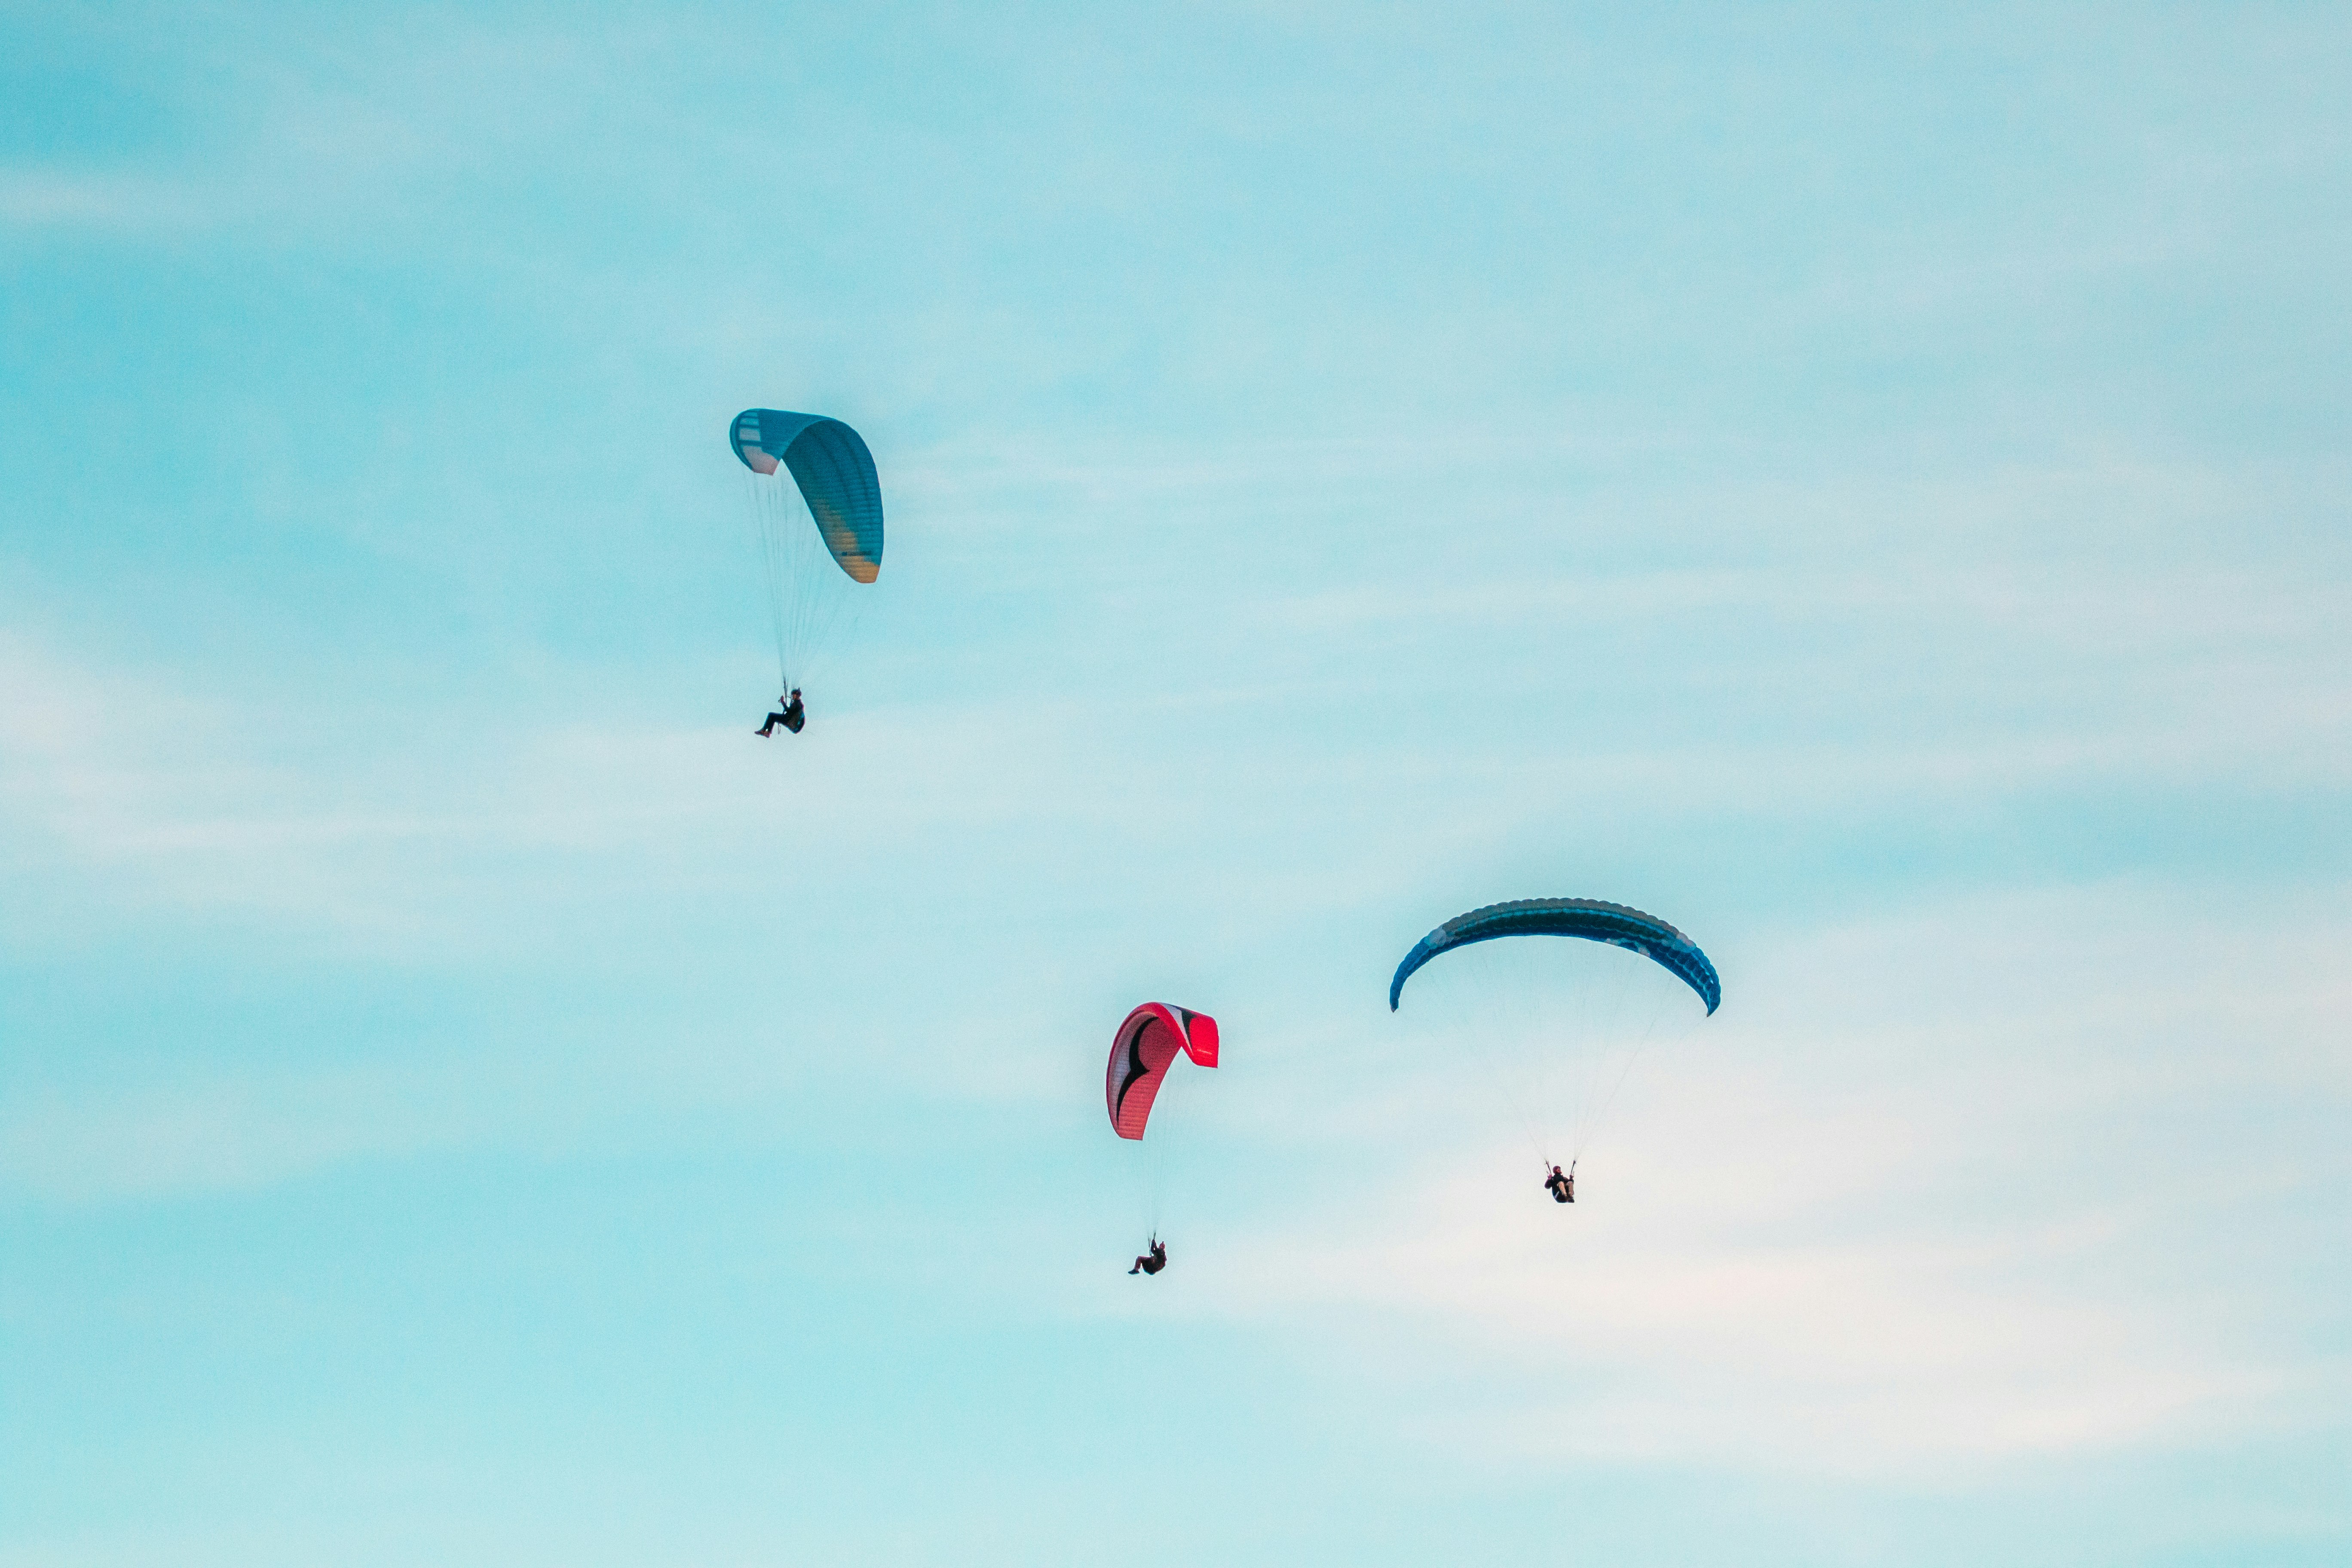 three person midair with parachutes